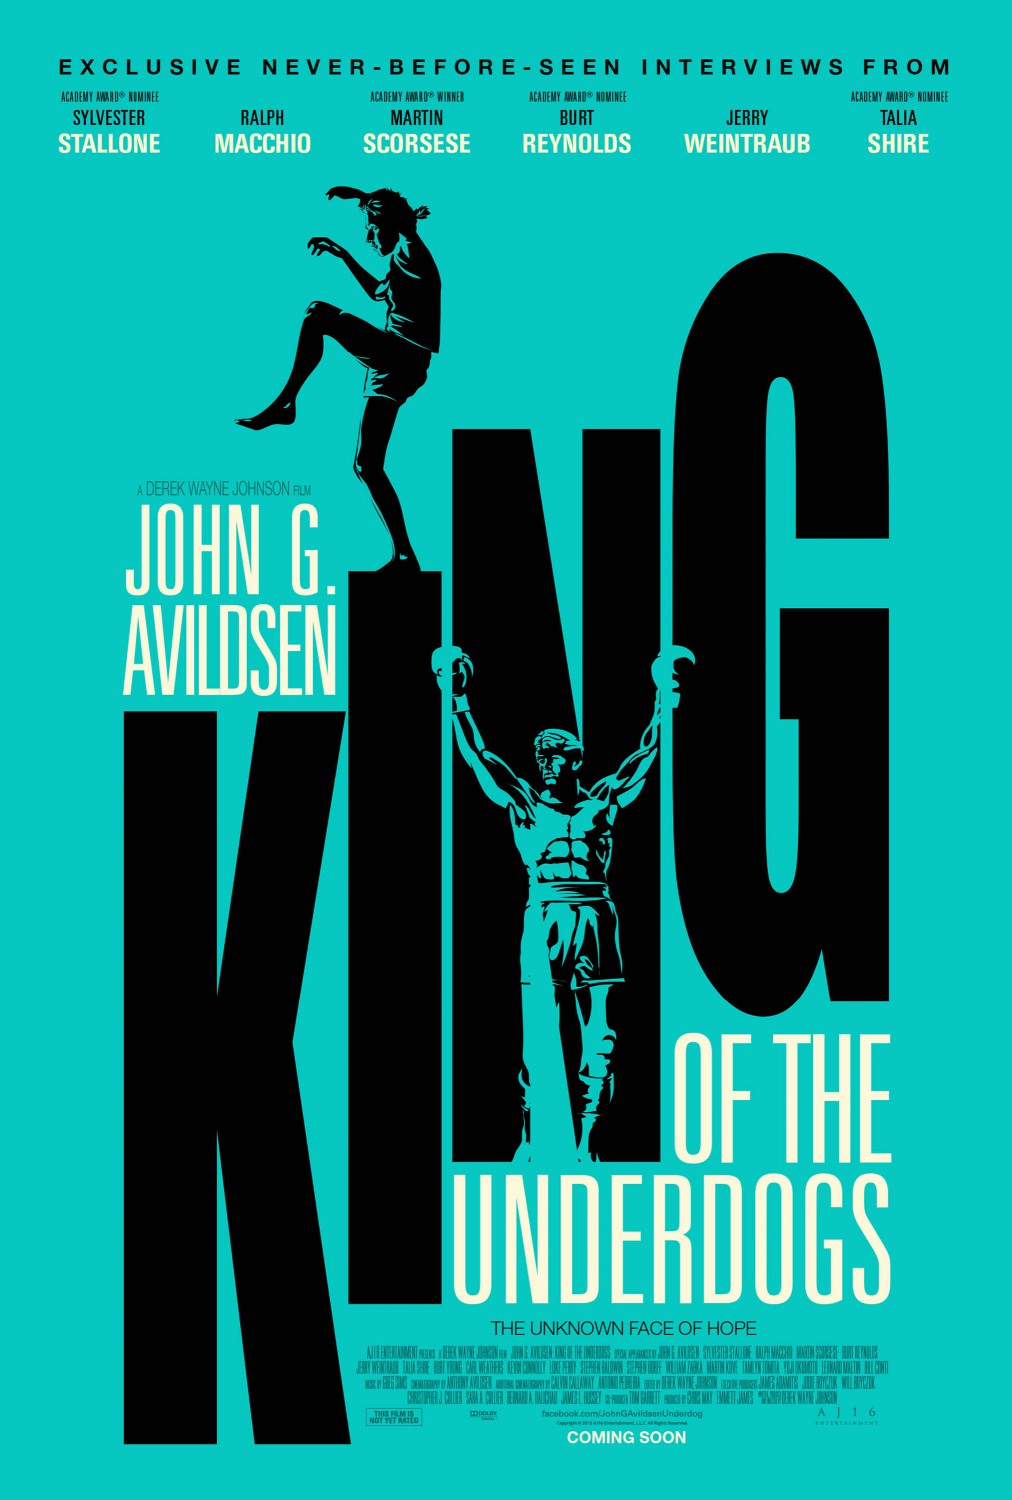 Extra Large Movie Poster Image for John G. Avildsen: King of the Underdogs (#2 of 2)